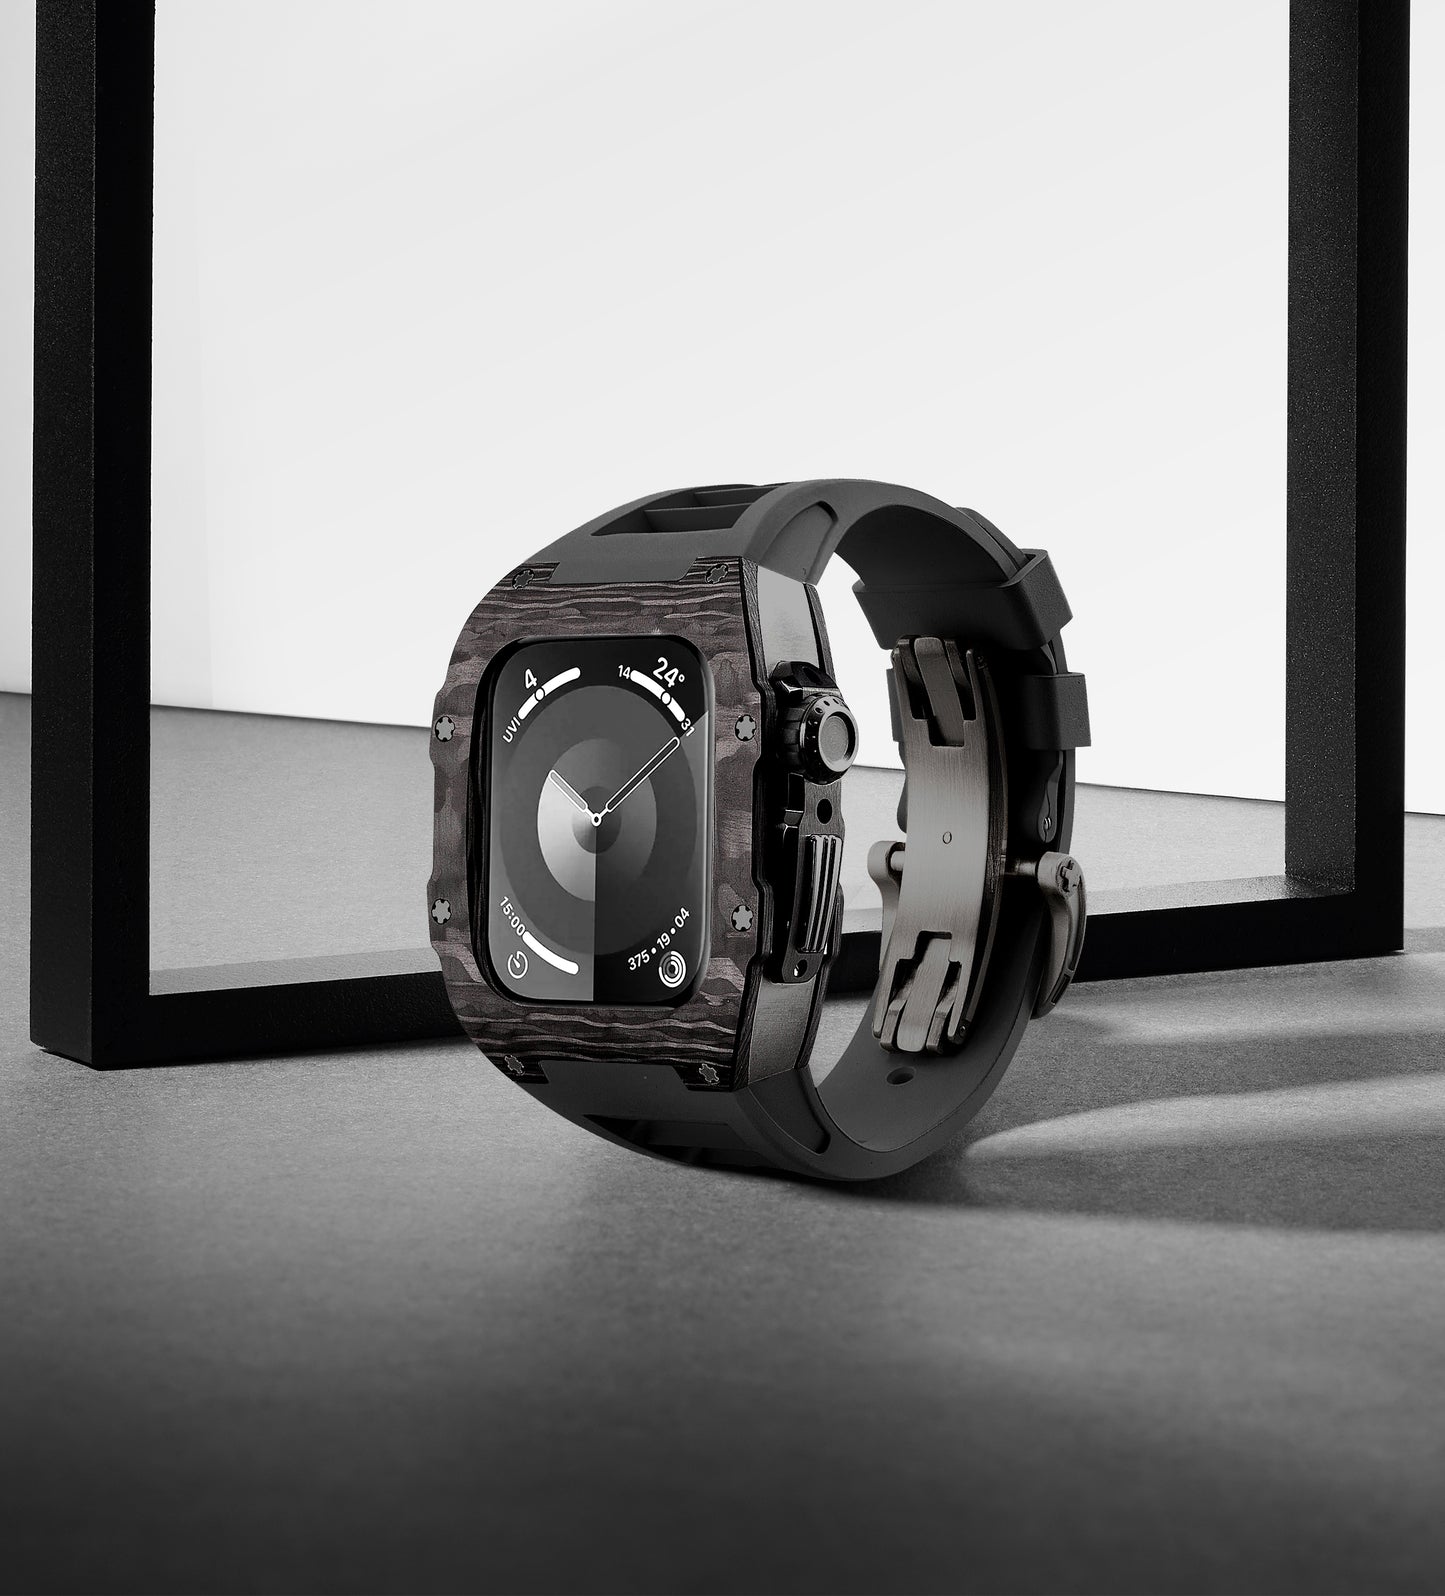 Apple Watch Case 44mm - Carbon Fiber Ti Black Case + Green Fluoro Strap (8 Screws)